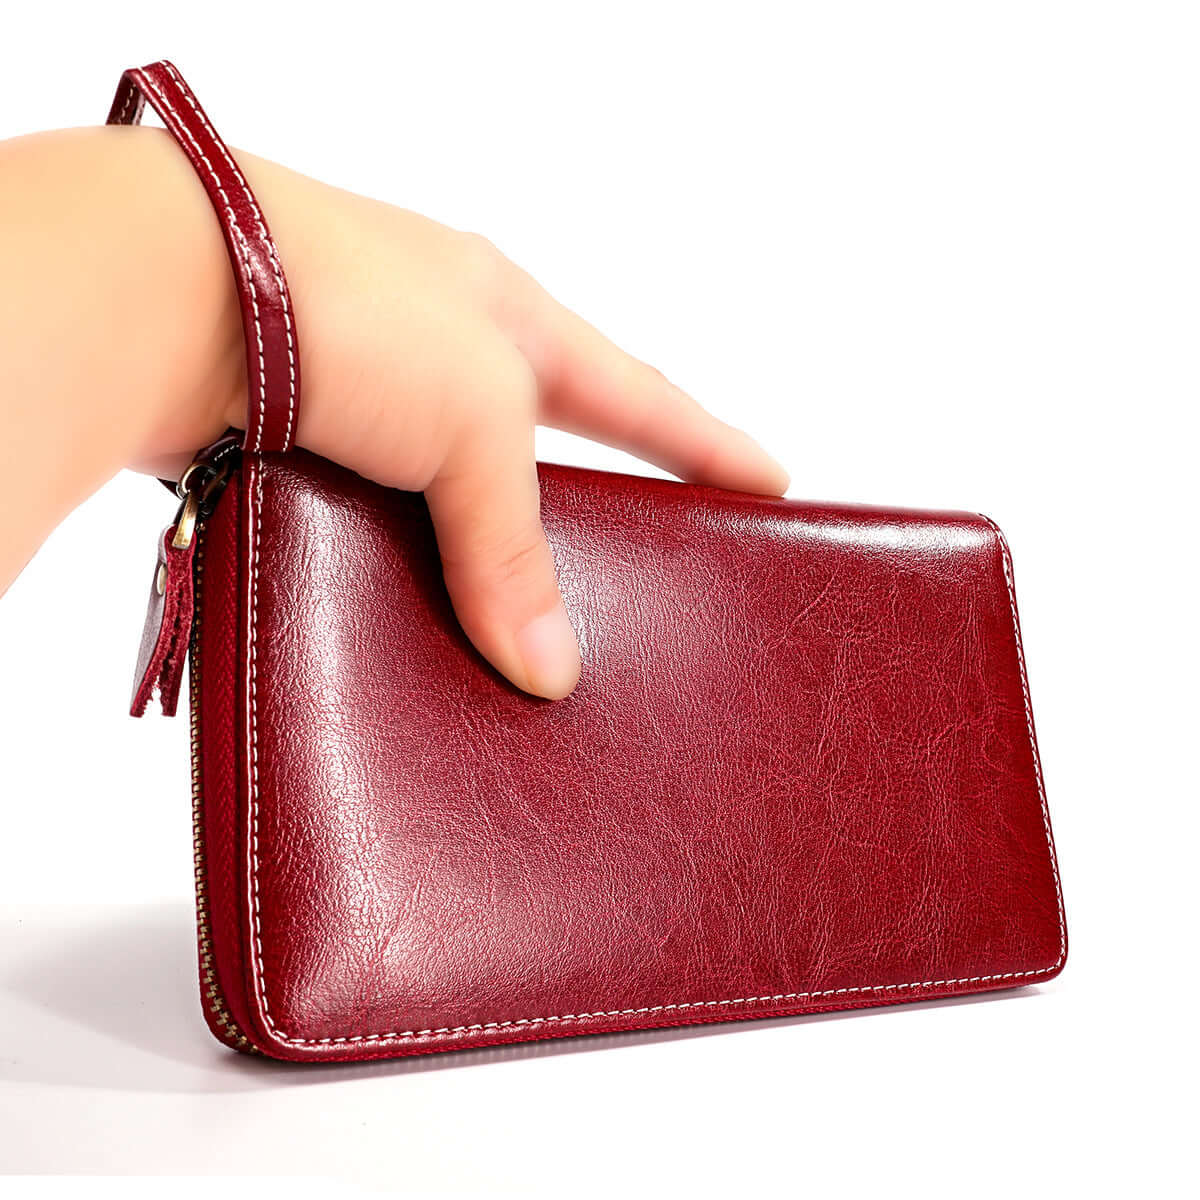 Anti-demagnetization leather wallet